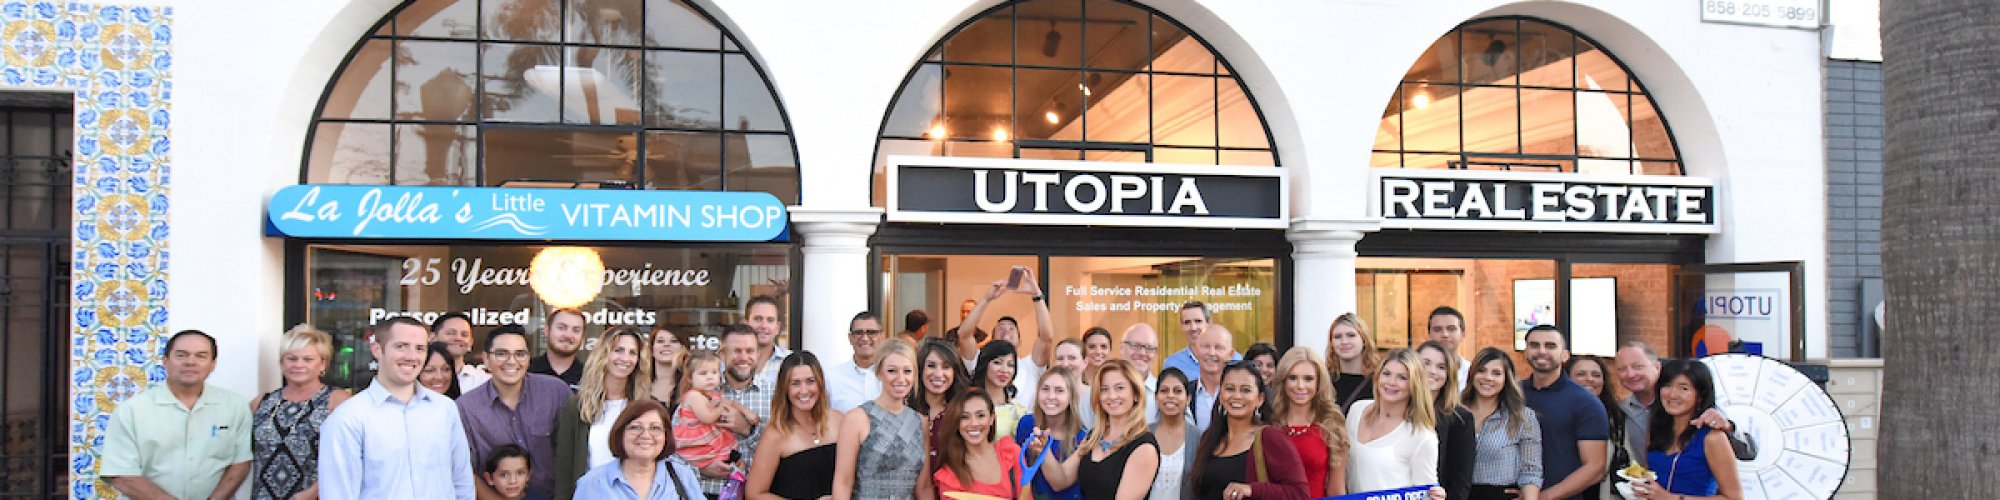 utopia management cancel lease